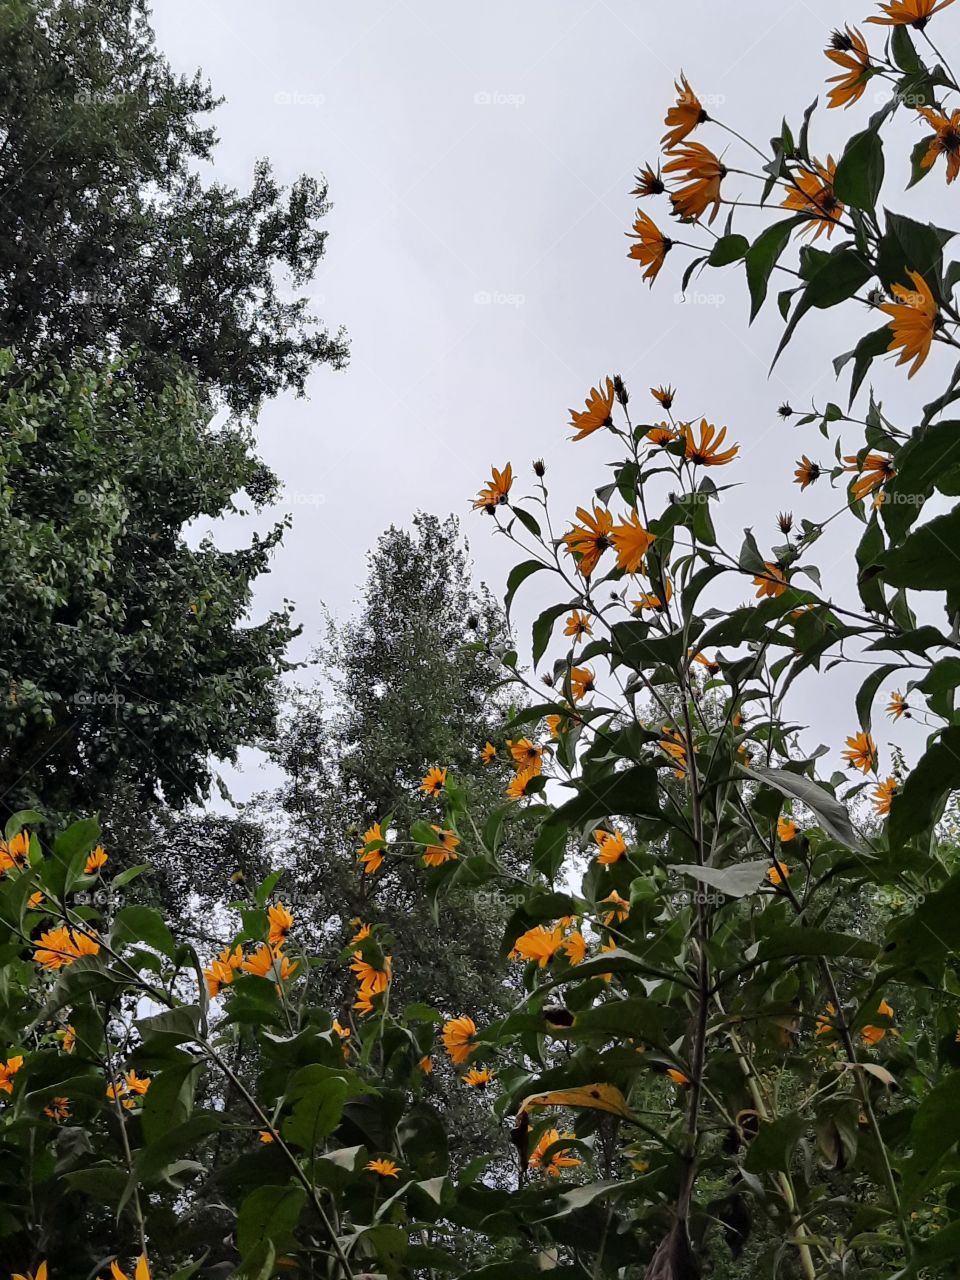 yellow topinambur flowers on a gray day